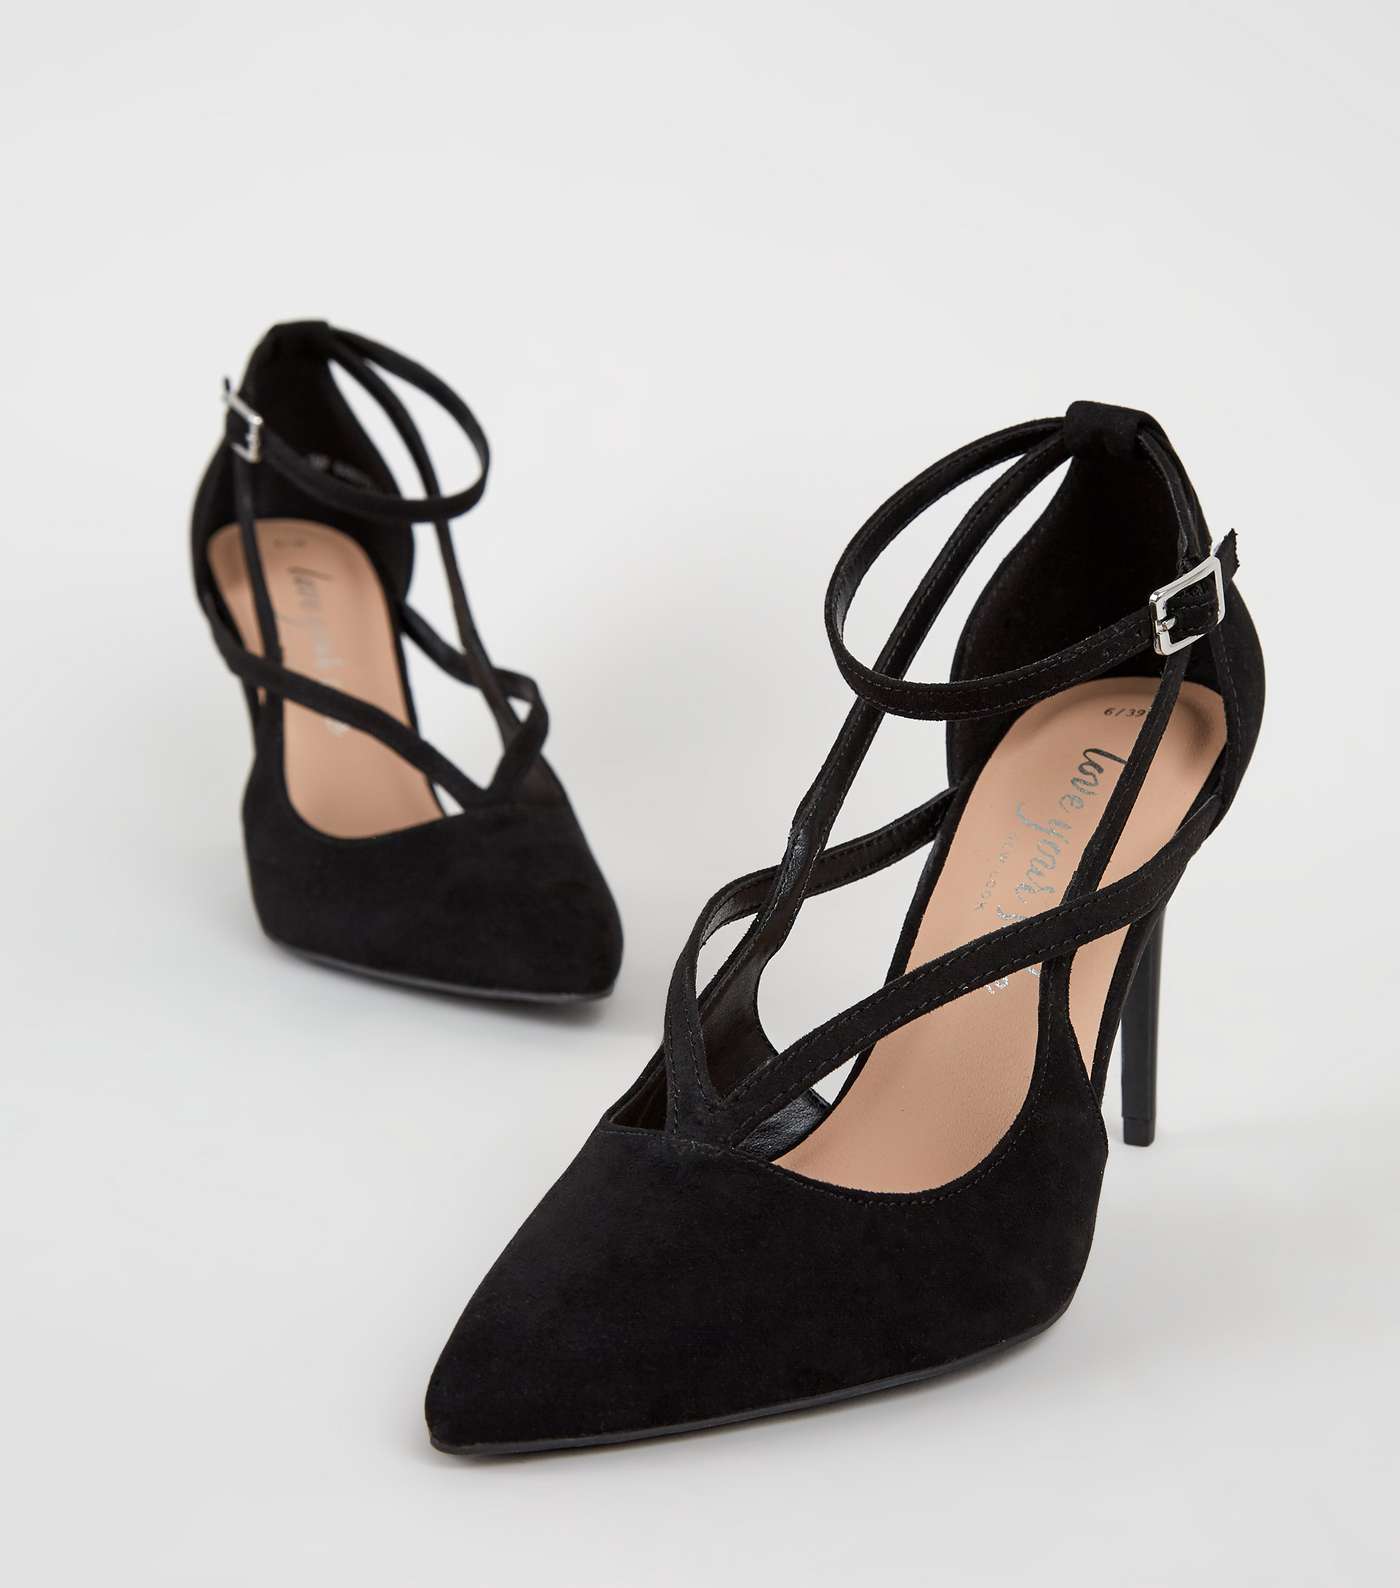 Black Suedette Strappy Stiletto Court Shoes Image 4